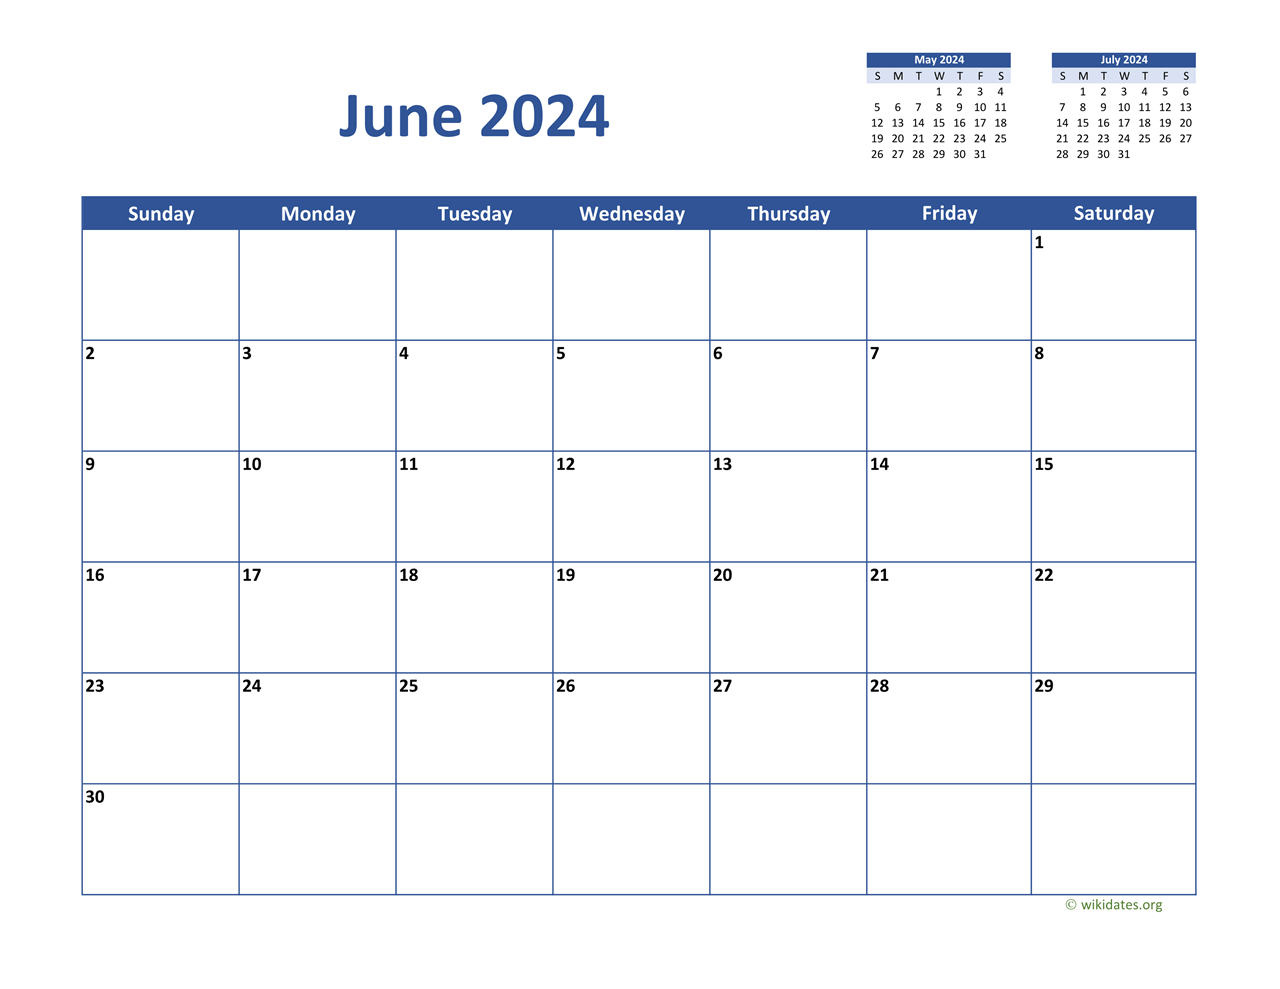 Waterproof Paper Calendar June 2024 bella margalo